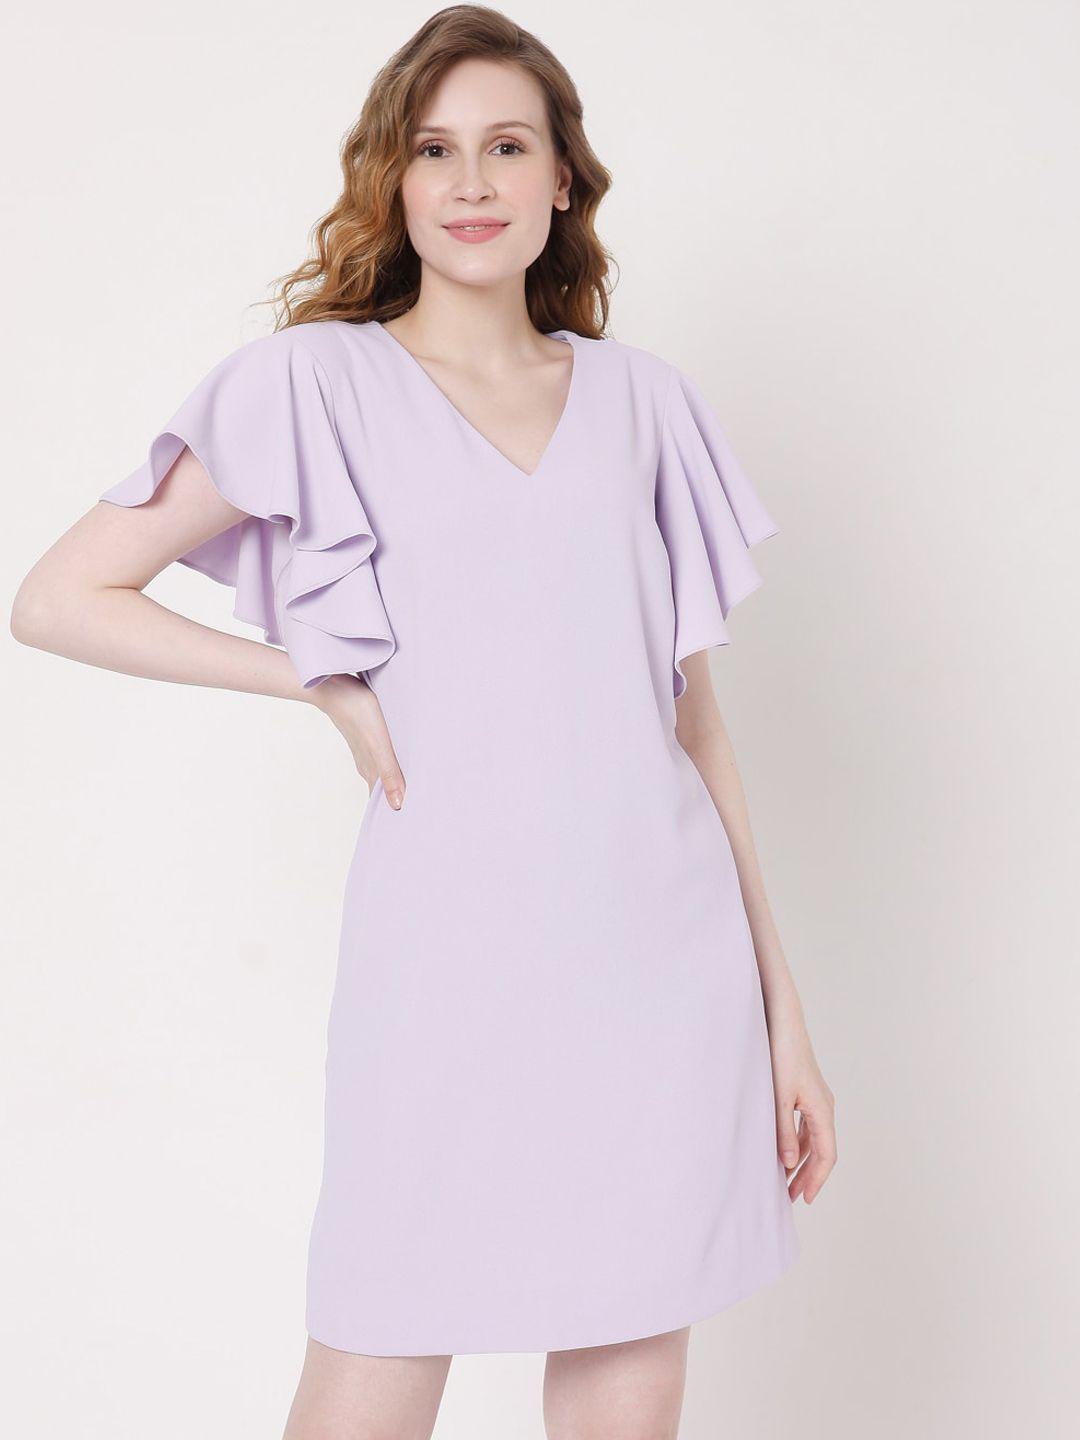 vero moda purple a-line dress